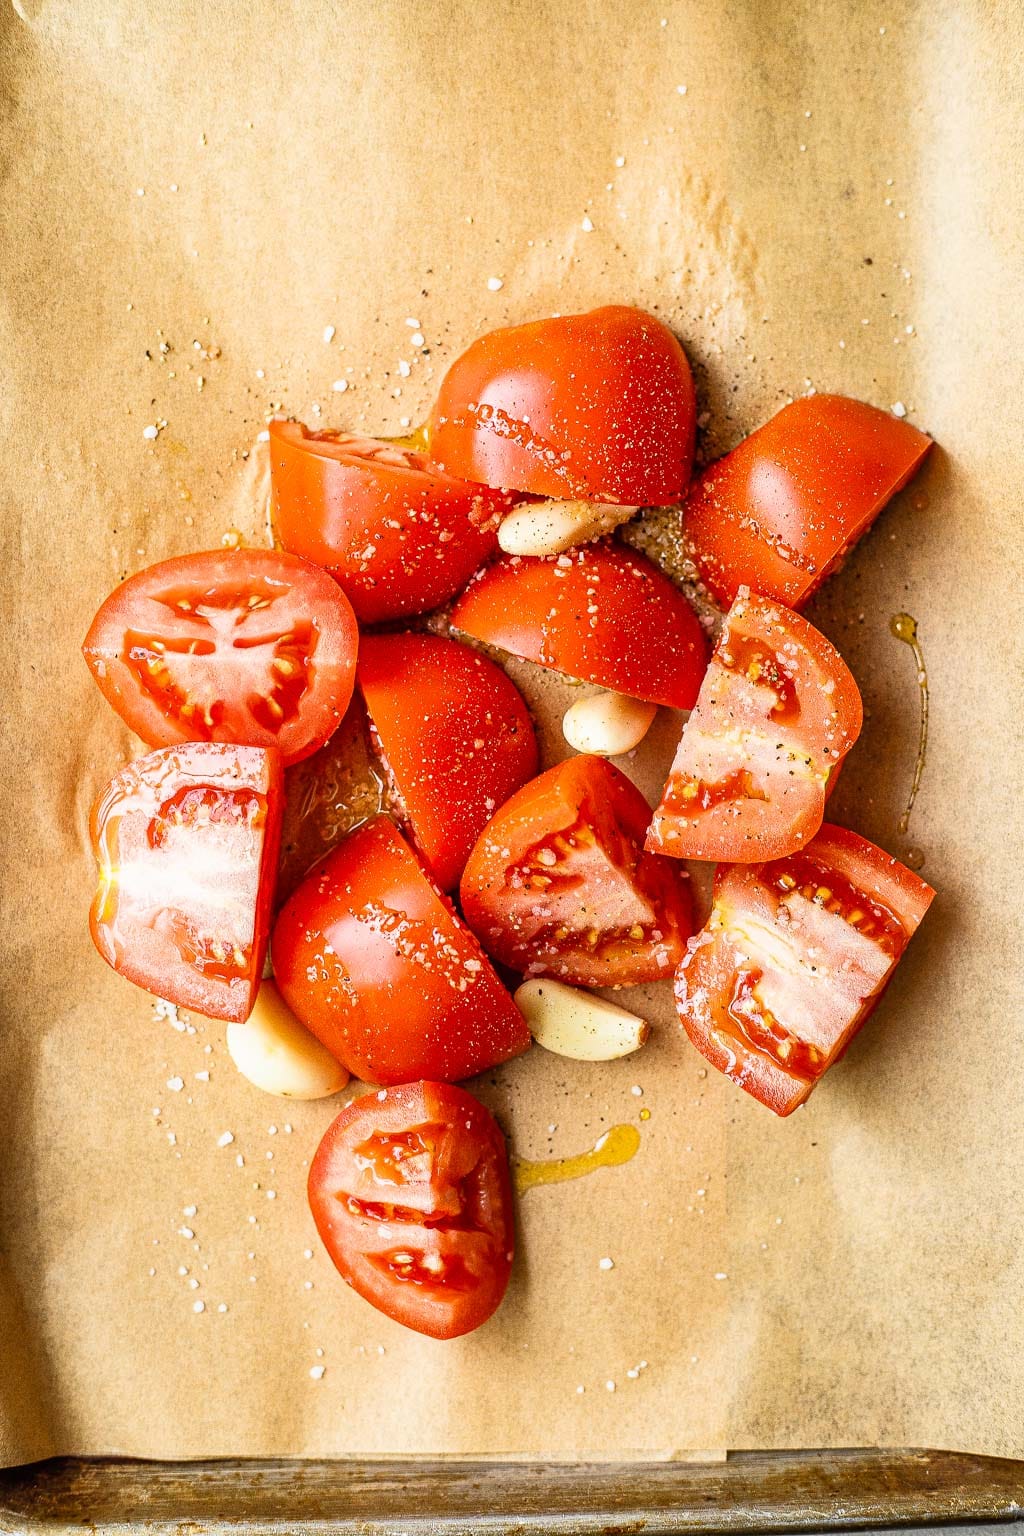 Tomatoes before roasting